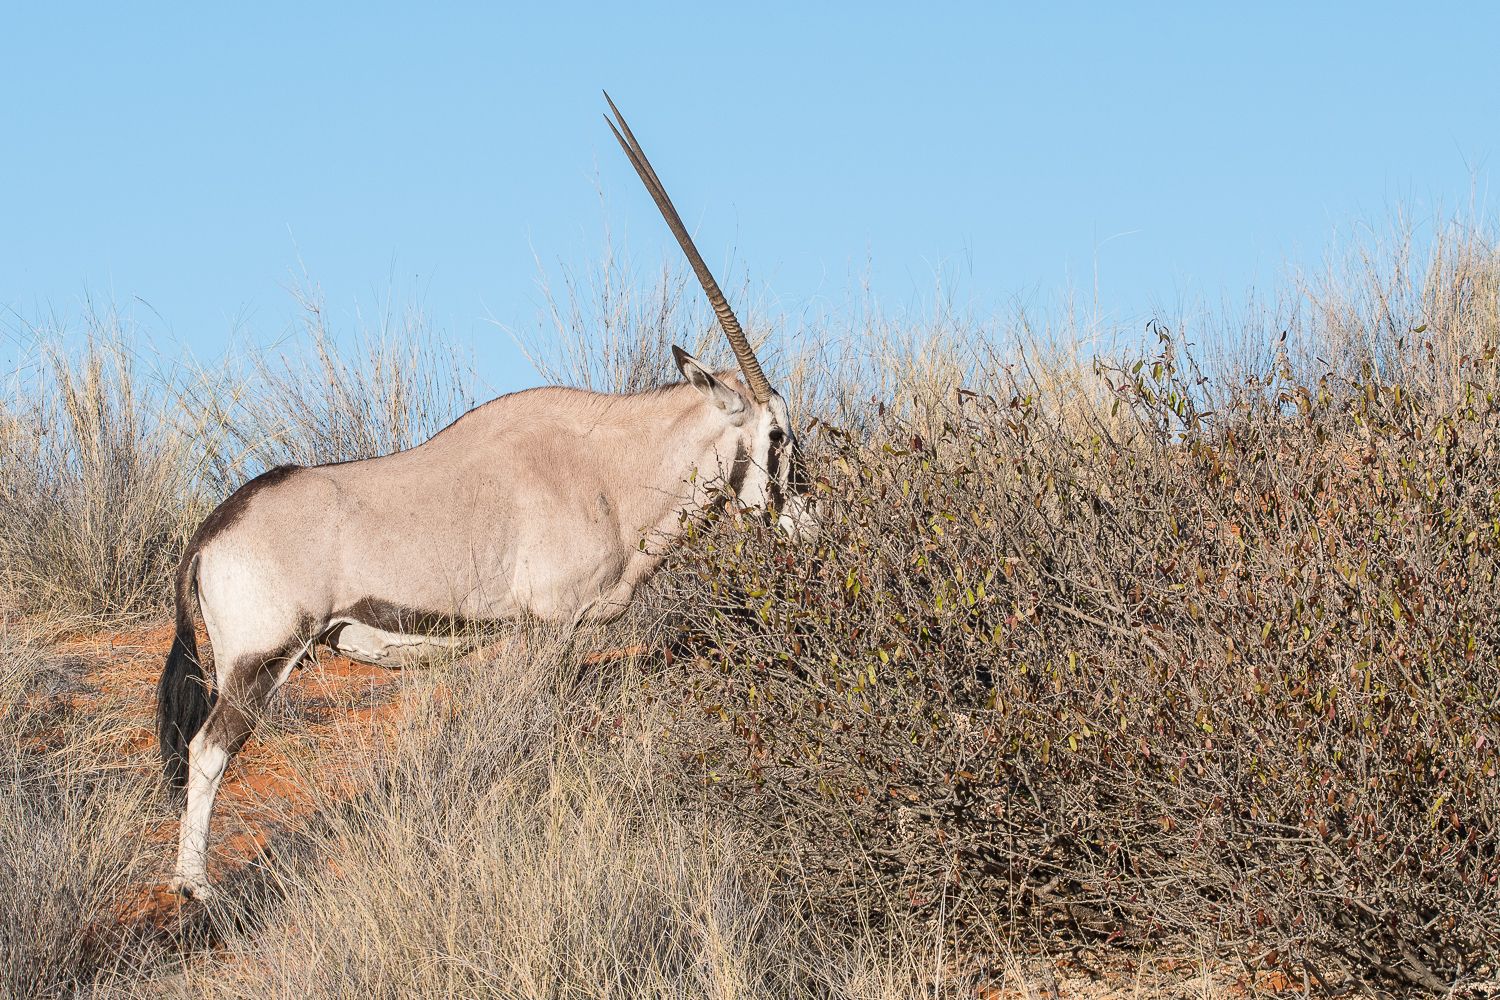 Oryx gazelle ou Gemsbok, (Gemsbok ou Southern Oryx, Oryx gazella), femelle broutant un buisson desséché, Etosha National Park, Namibie.
 * 